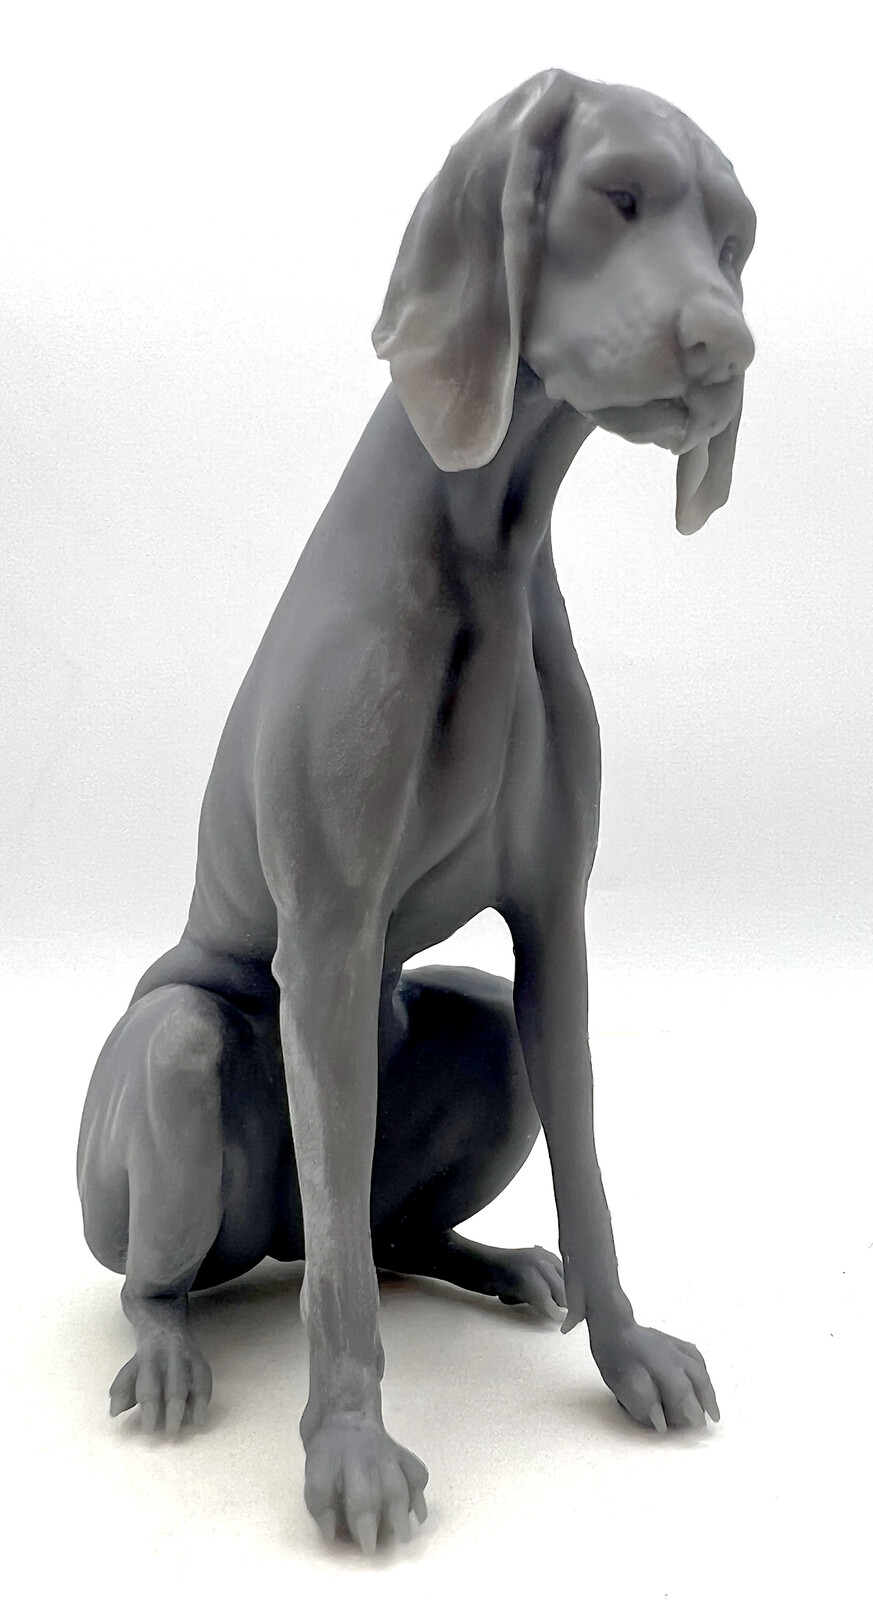 3D print of my dog sculpt in Grey resin - Form 3 print